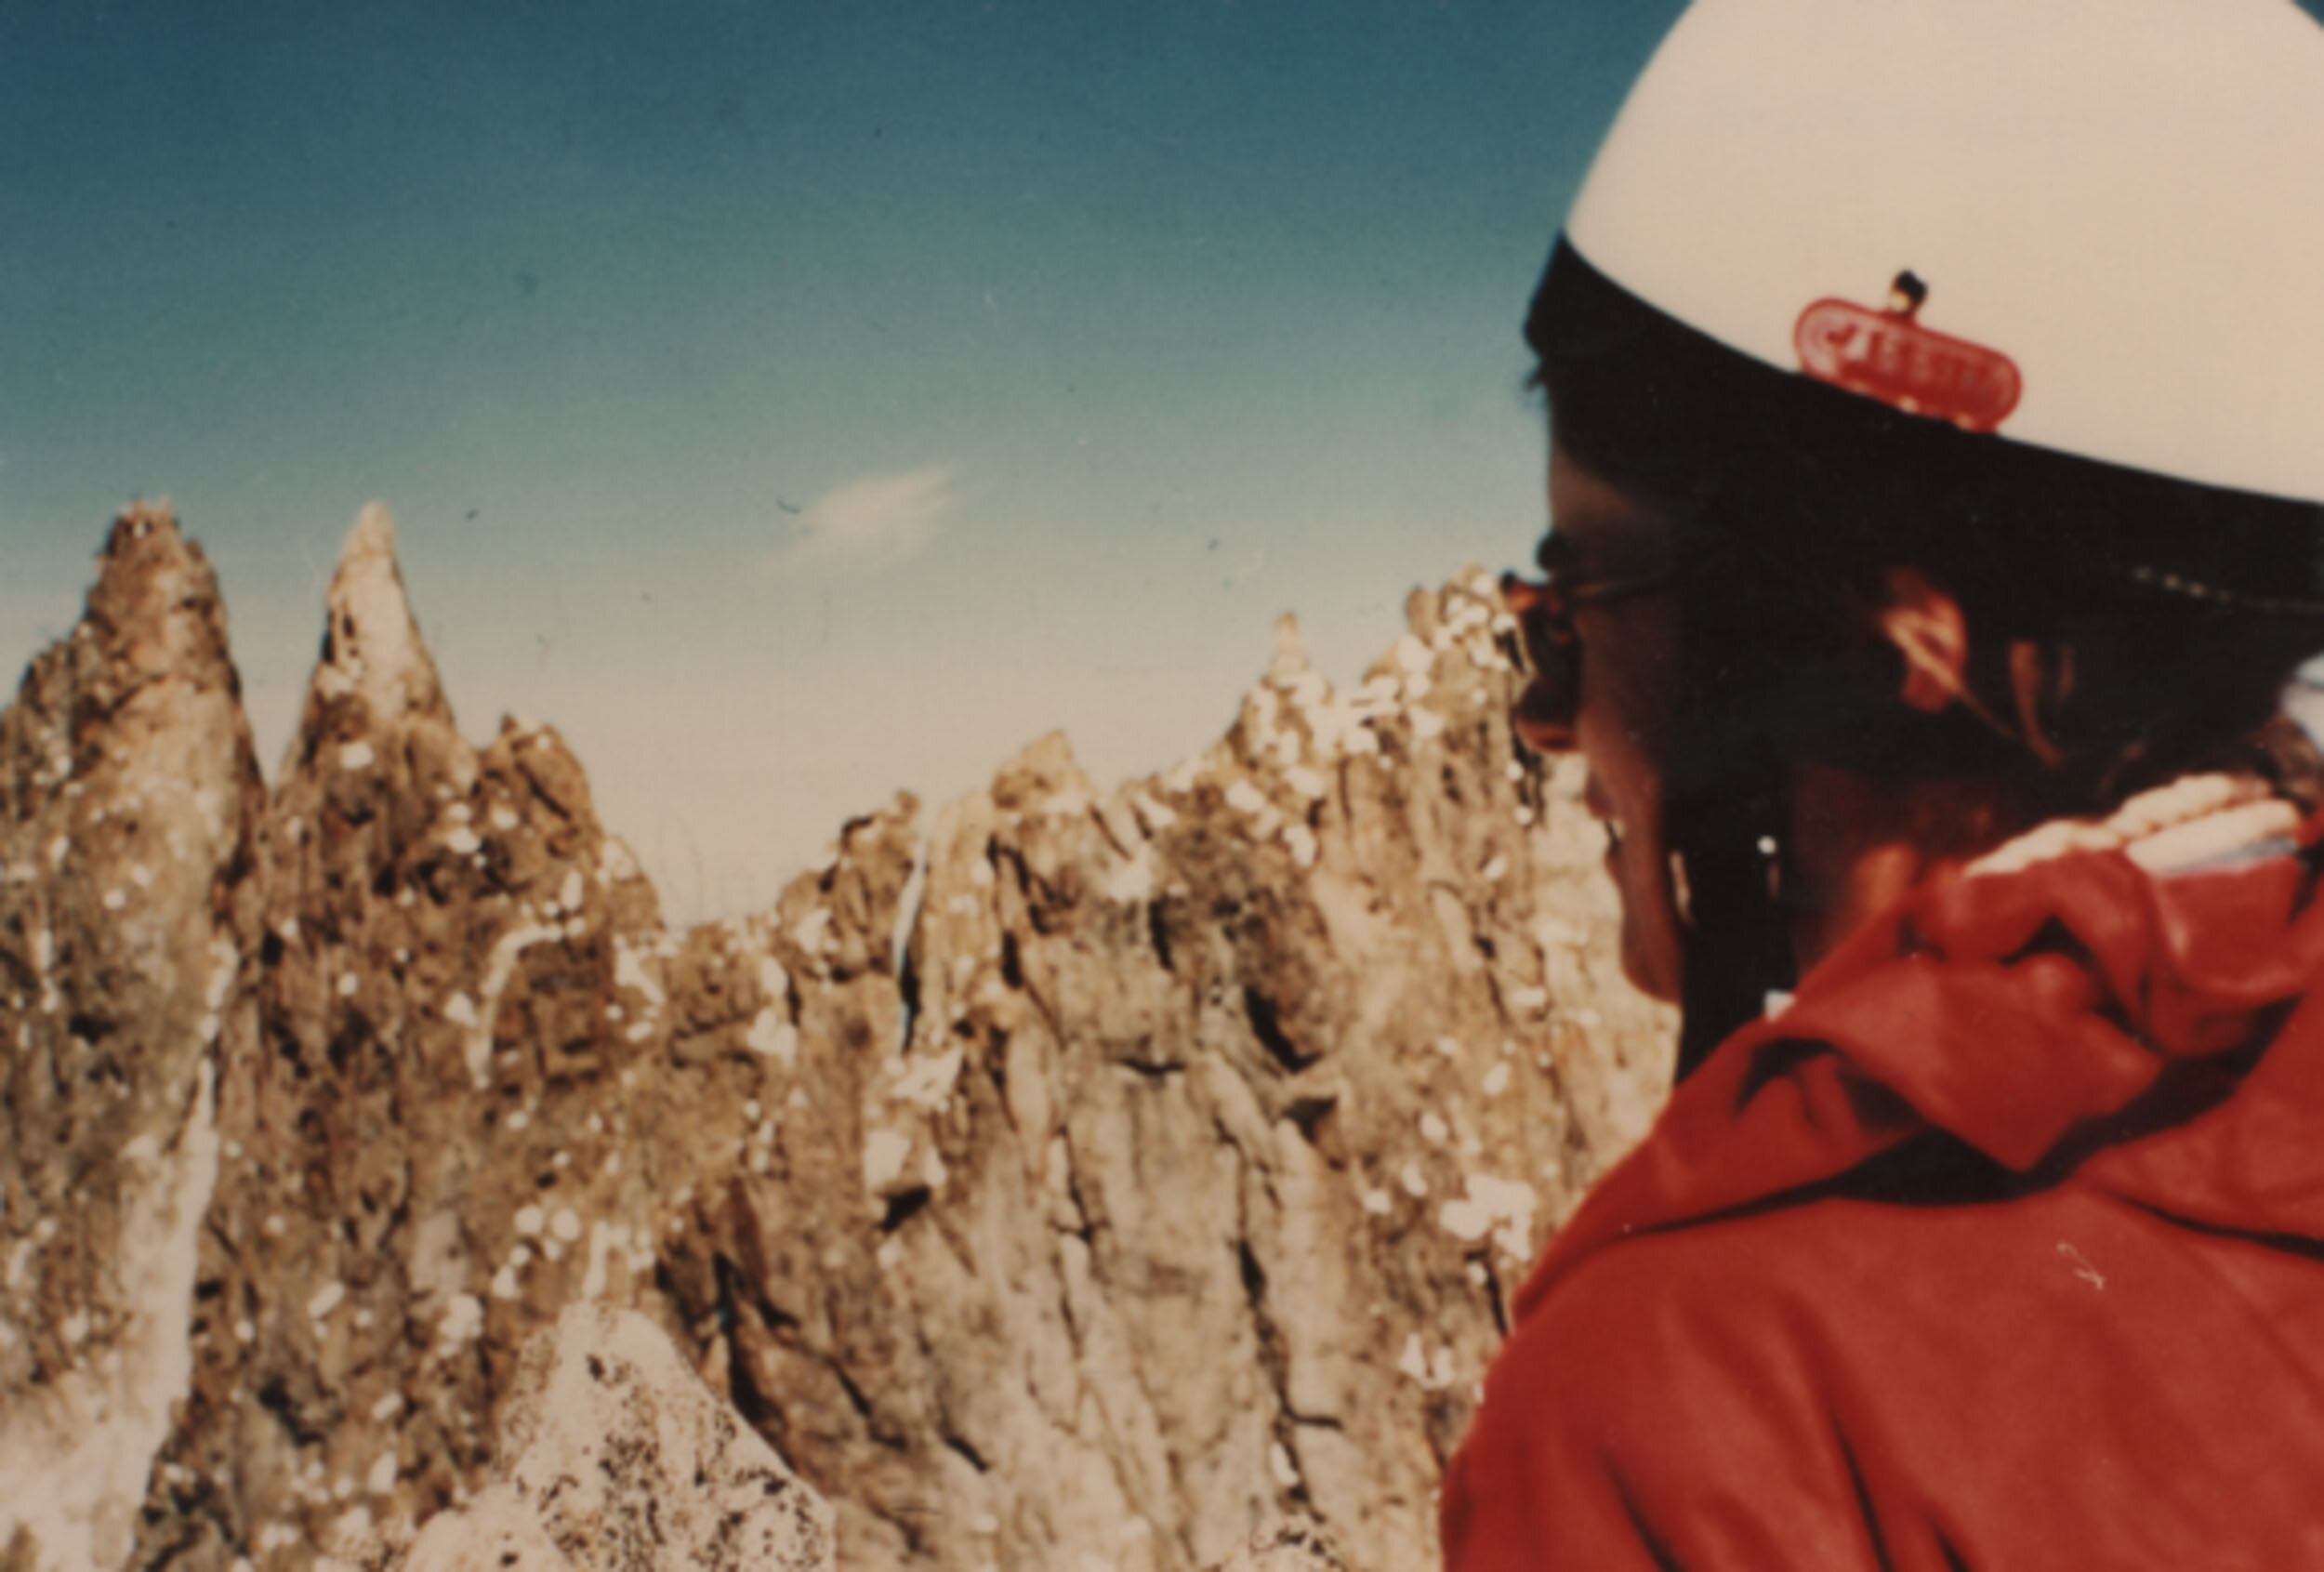 Sylvia Yates at the Rendez-vous Hautes Montagnes, Wichelplankstock Ridge, Urner Alps, 1973